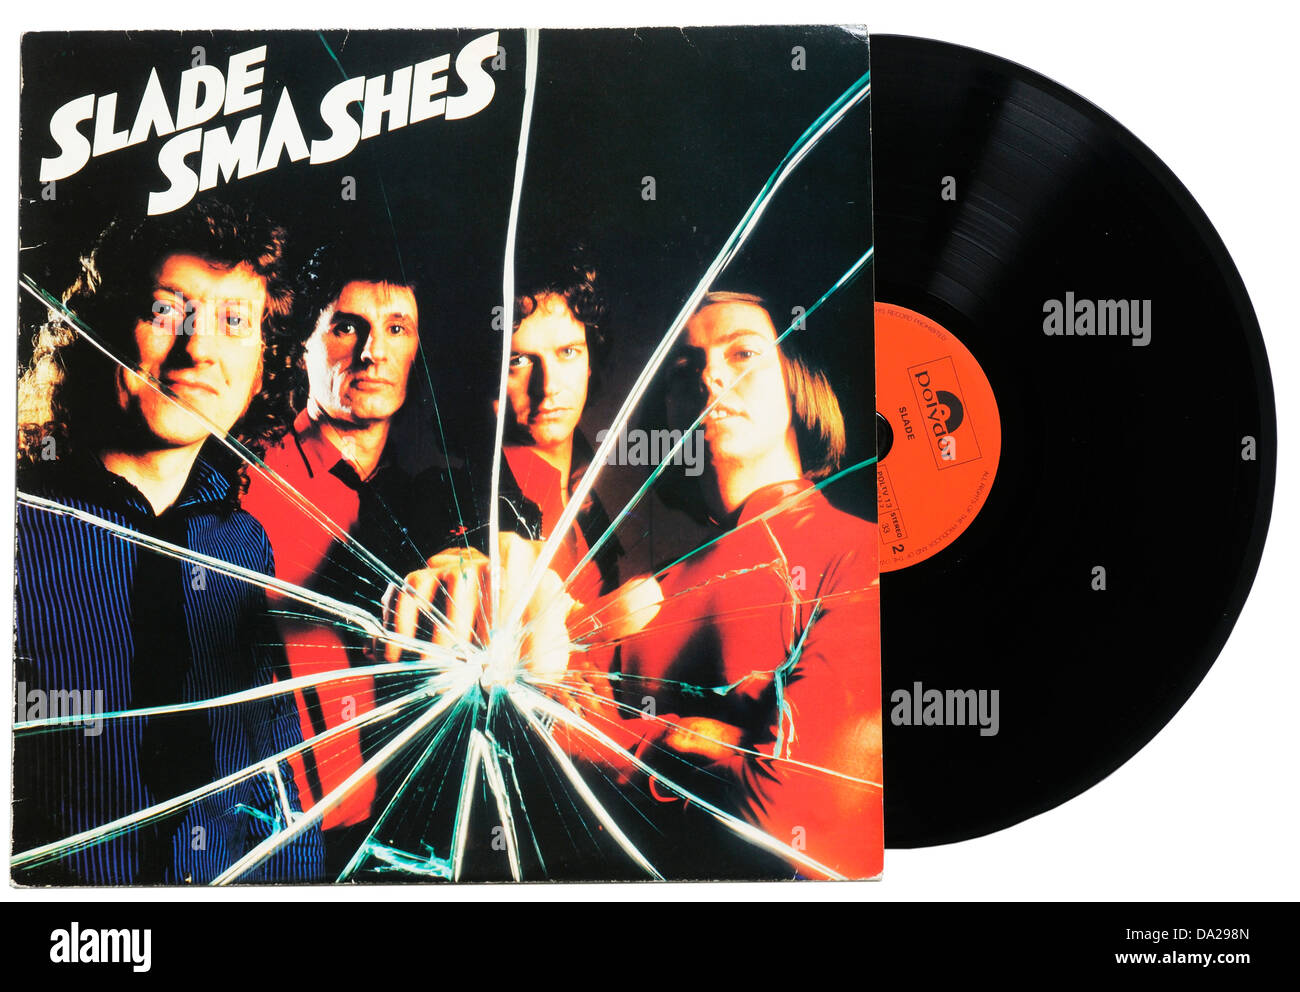 Slade Smashes album Stock Photo